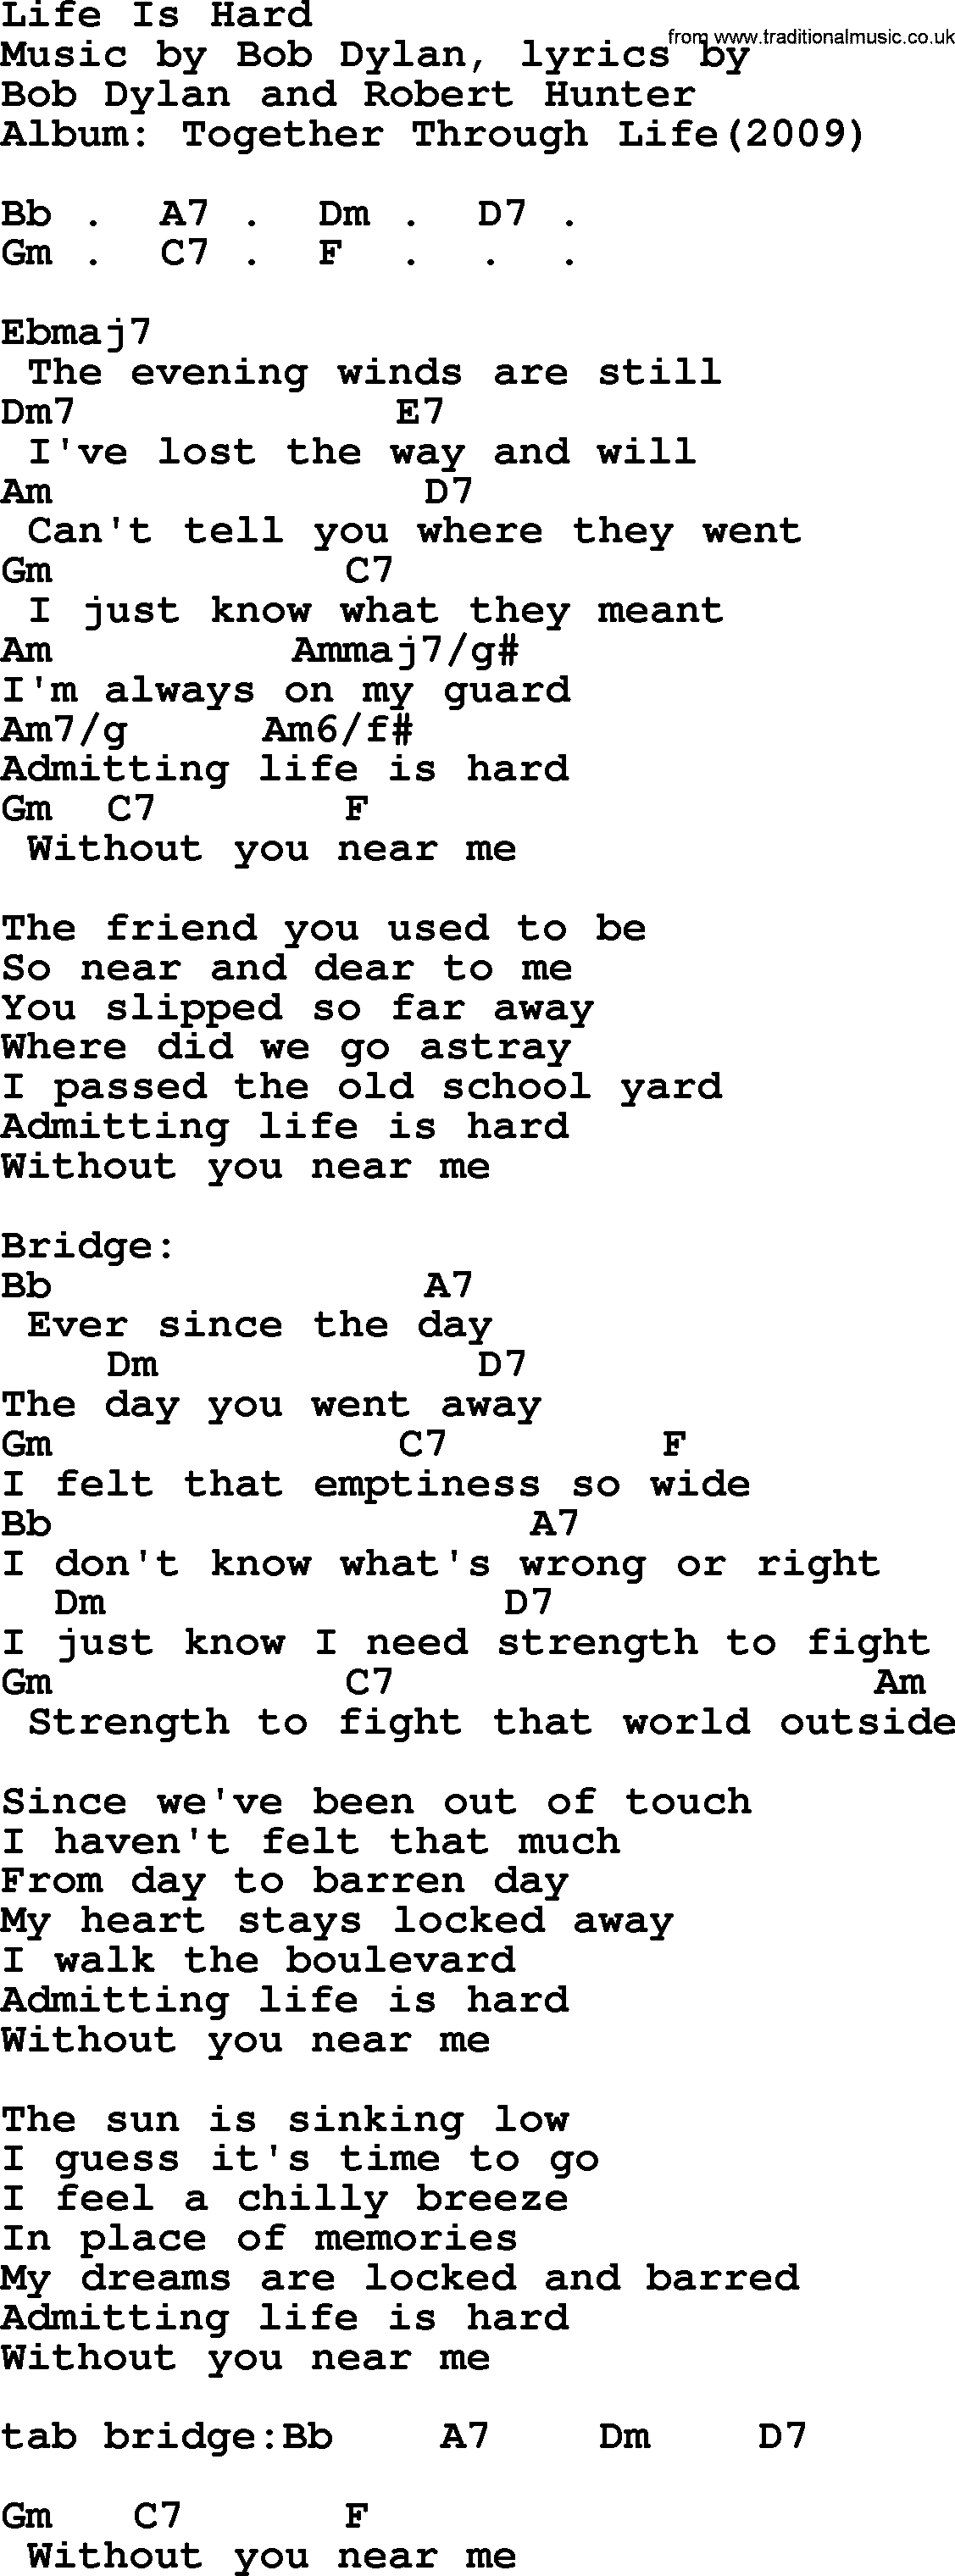 Bob Dylan song, lyrics with chords - Life Is Hard